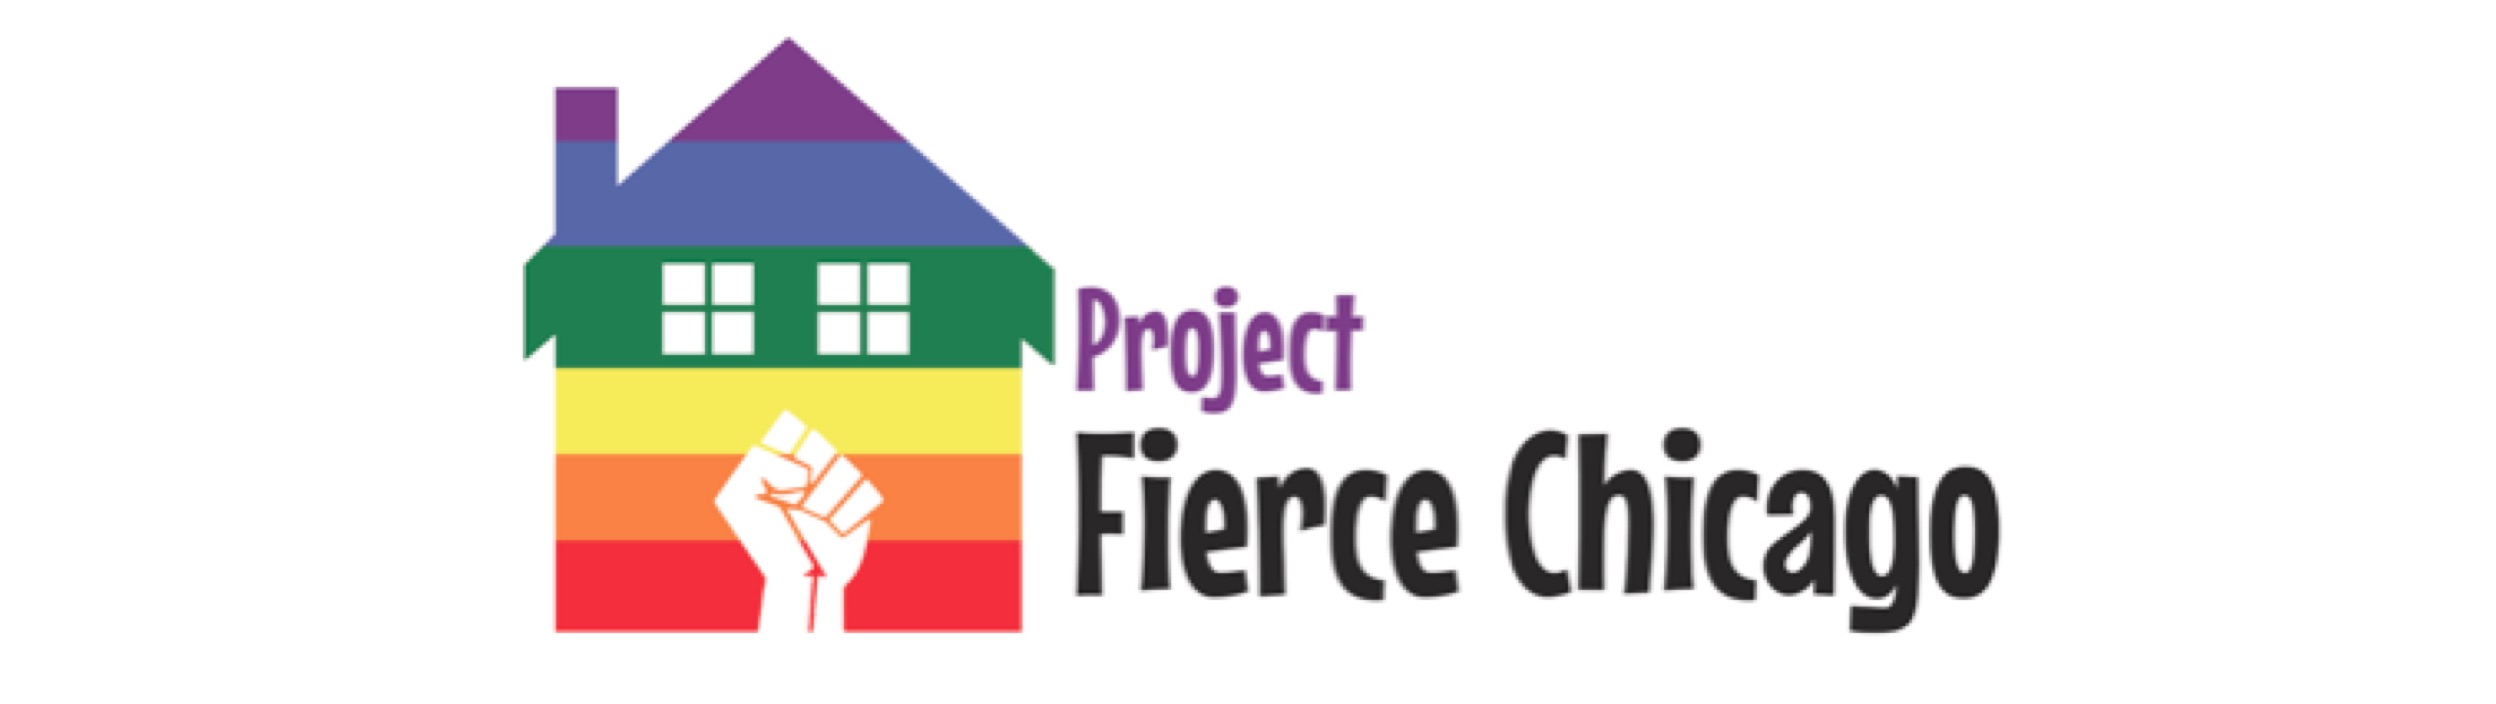 Project Fierce Chicago